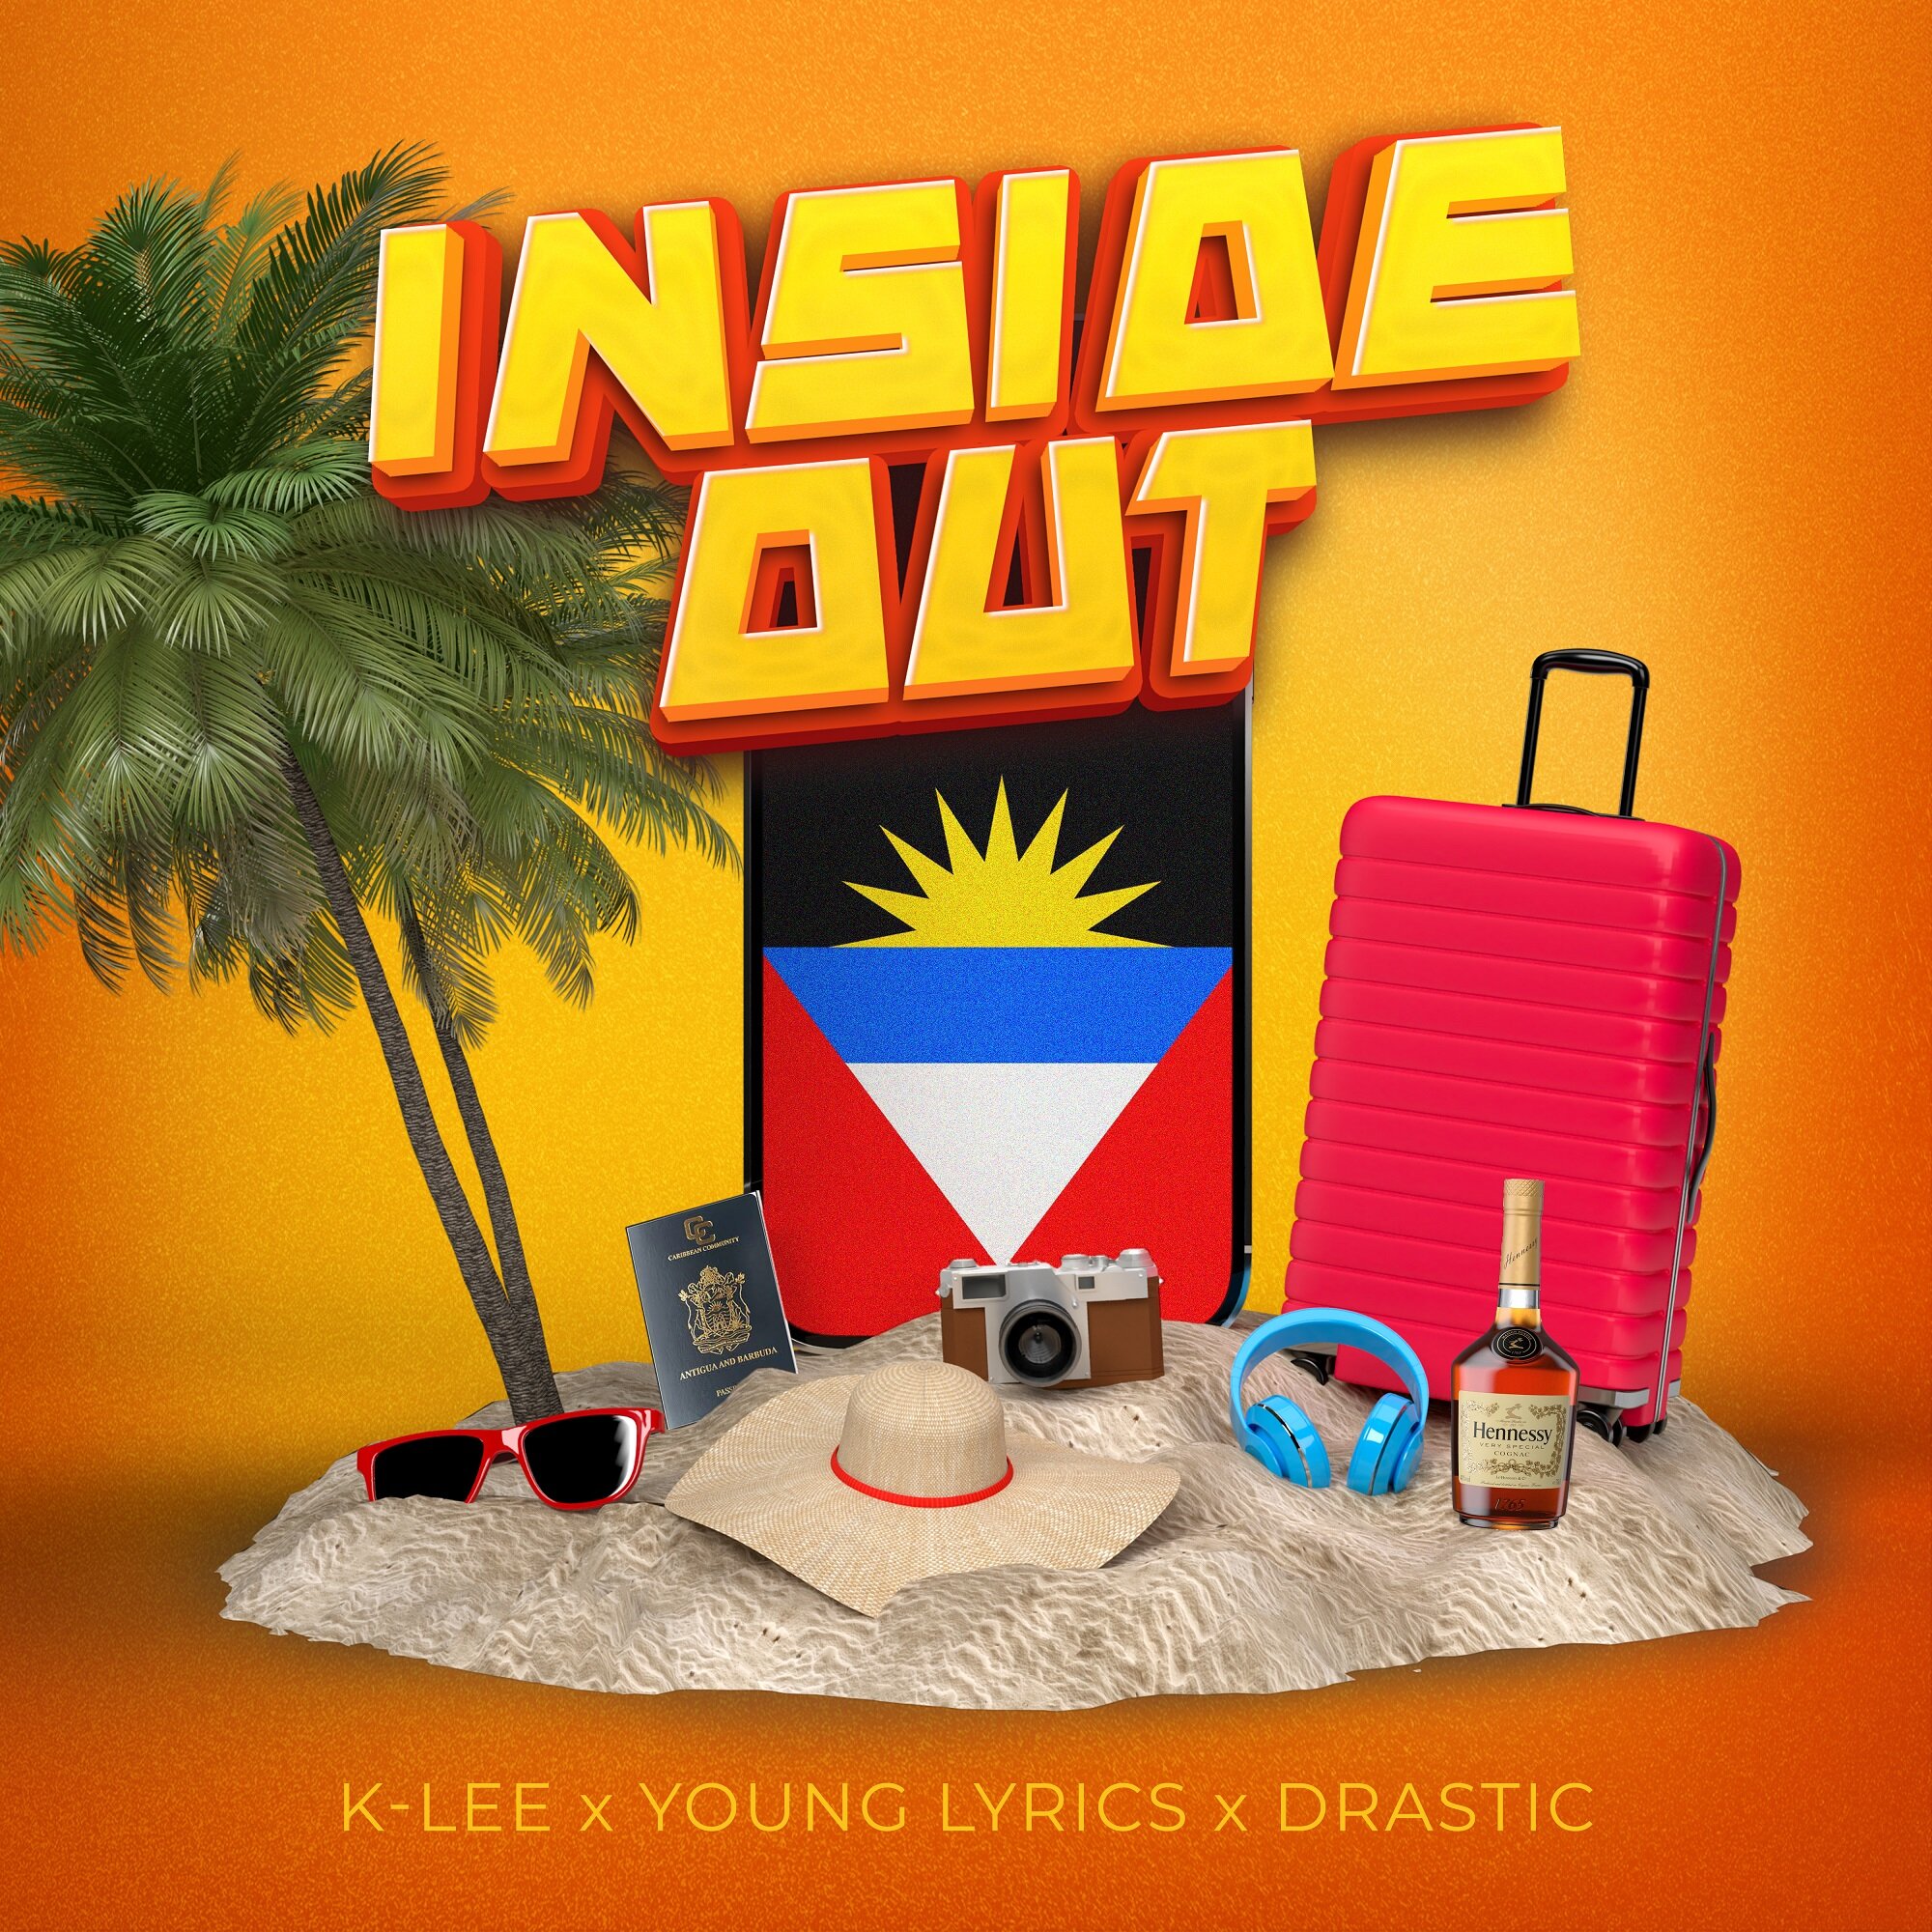 K-Lee x Young Lyrics x Drastic - Inside Out